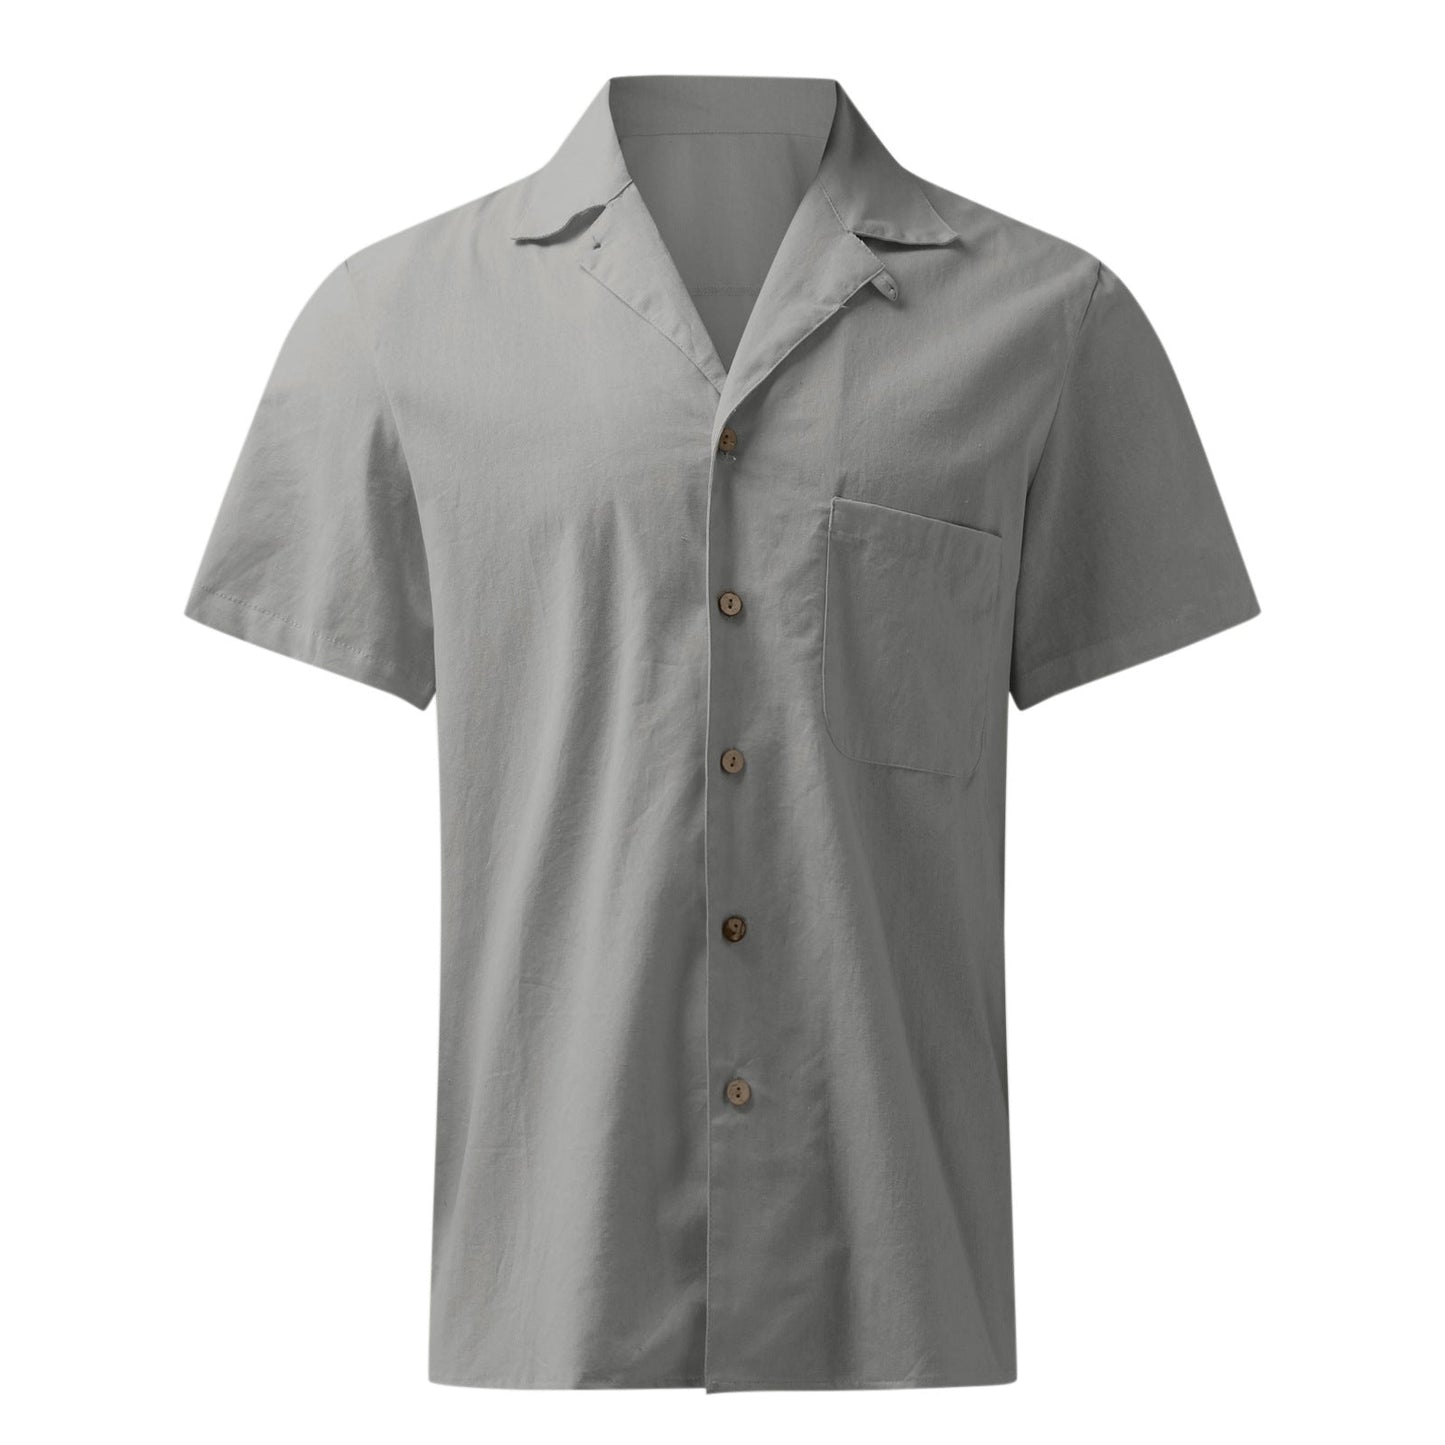 Casual Linen Short Sleeves Shirts for Men-Shirts & Tops-Gray-S-Free Shipping at meselling99